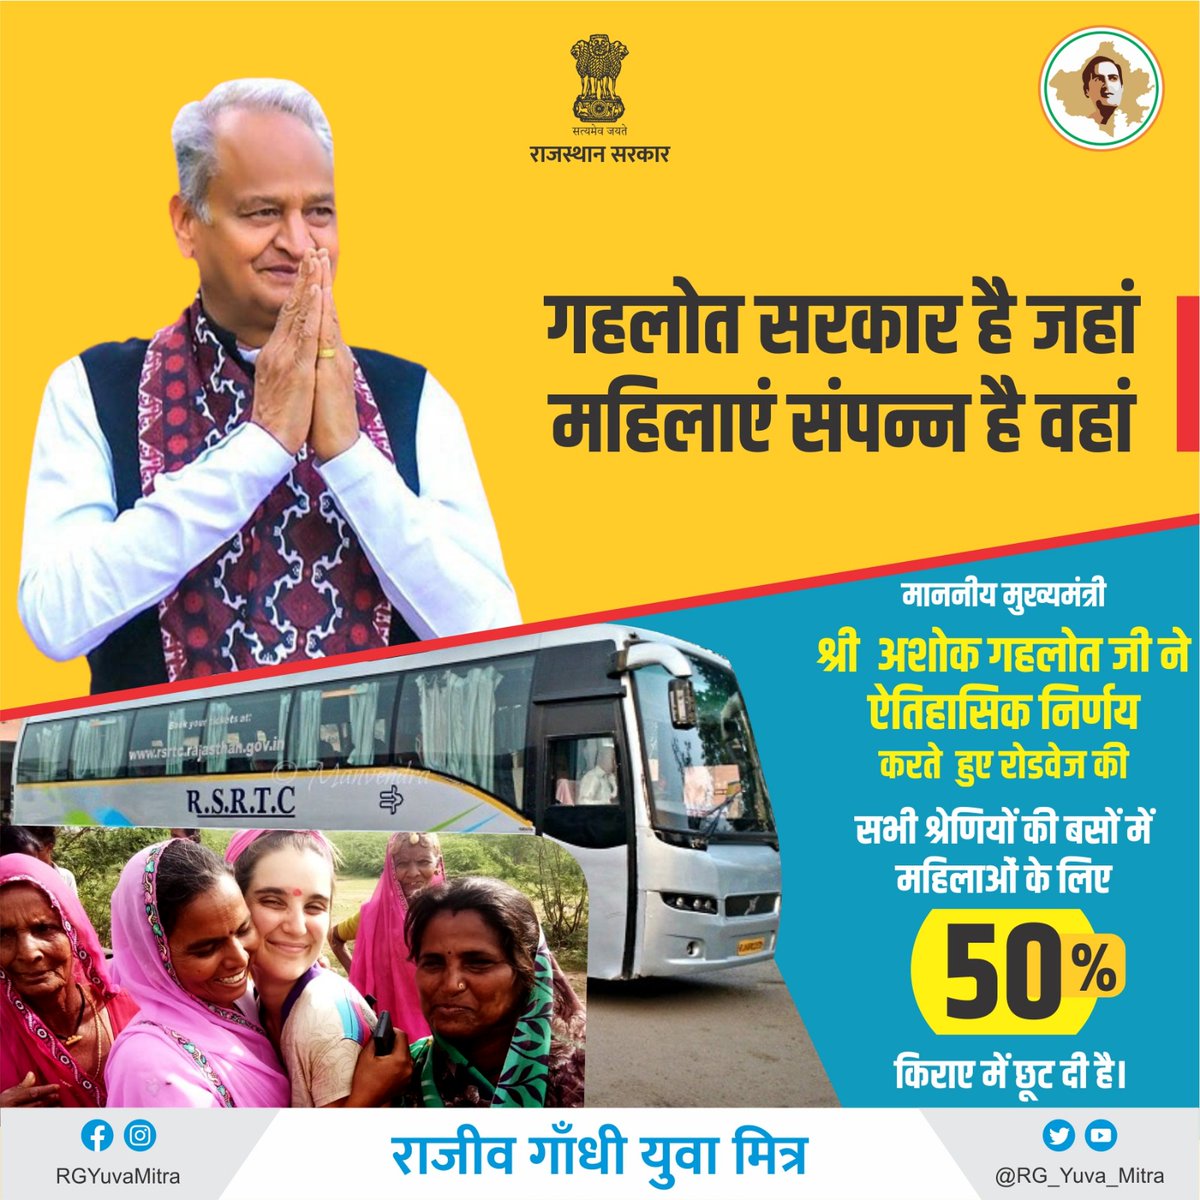 गहलोत सरकार है जहां,
महिलाएं संपन्न है वहां

#Roadways #Rajasthan #RajasthanRoadways @_lokeshsharma @_Team_LS @ashokgehlot51 @RahulGandhi @PMOIndia @RajAwareness @ABPNews @DrSatishPoonia @Mahipalbish9e